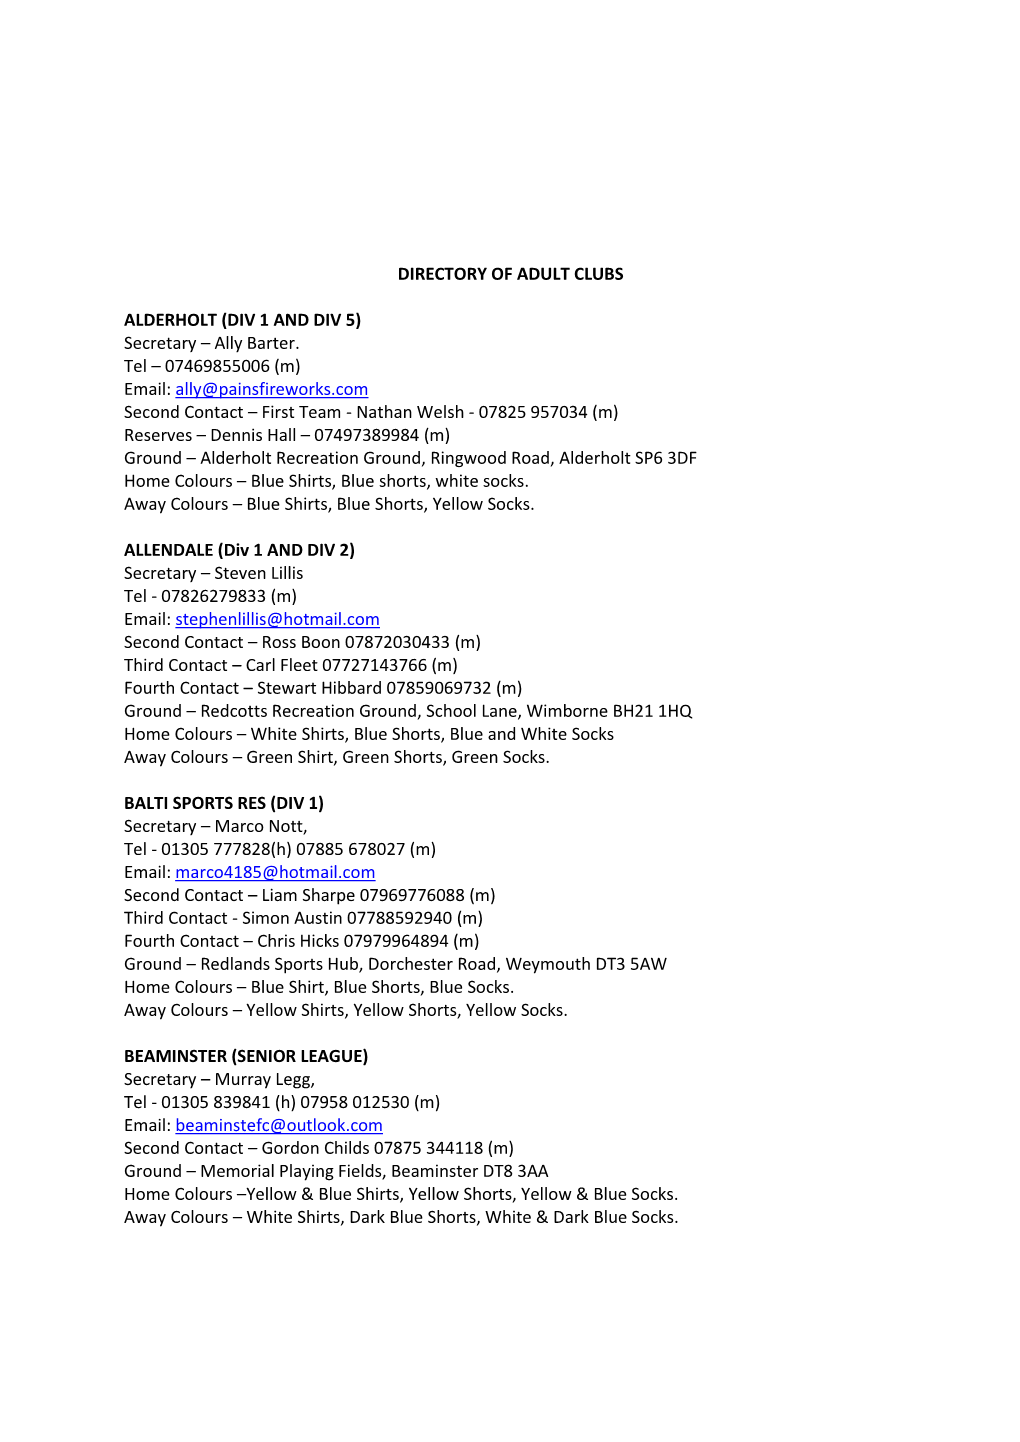 Directory of Adult Clubs Alderholt